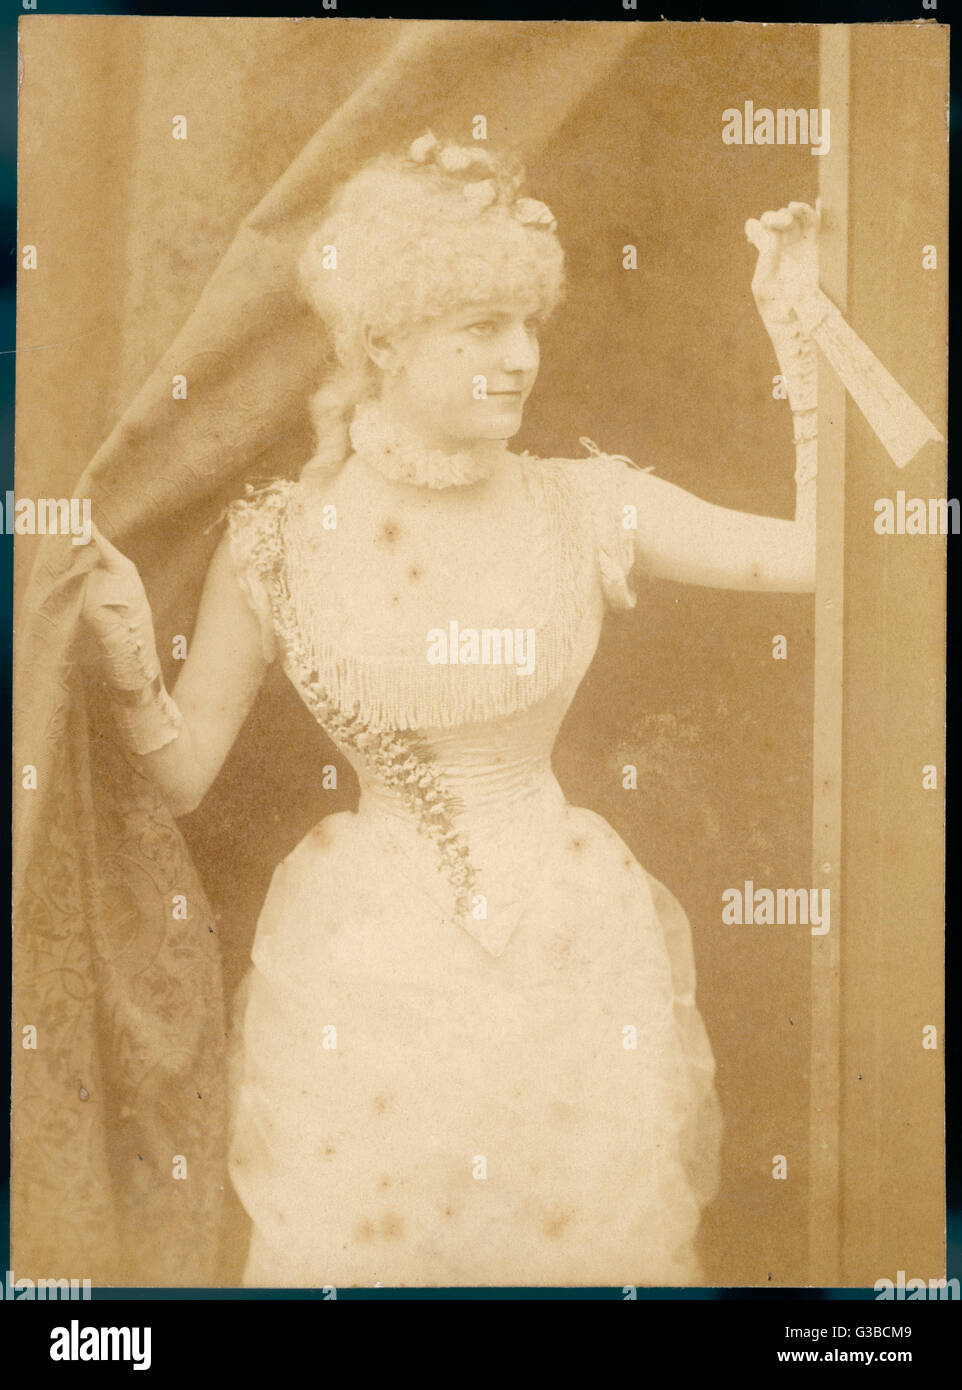 Female Type - Actress? - 19th century Stock Photo